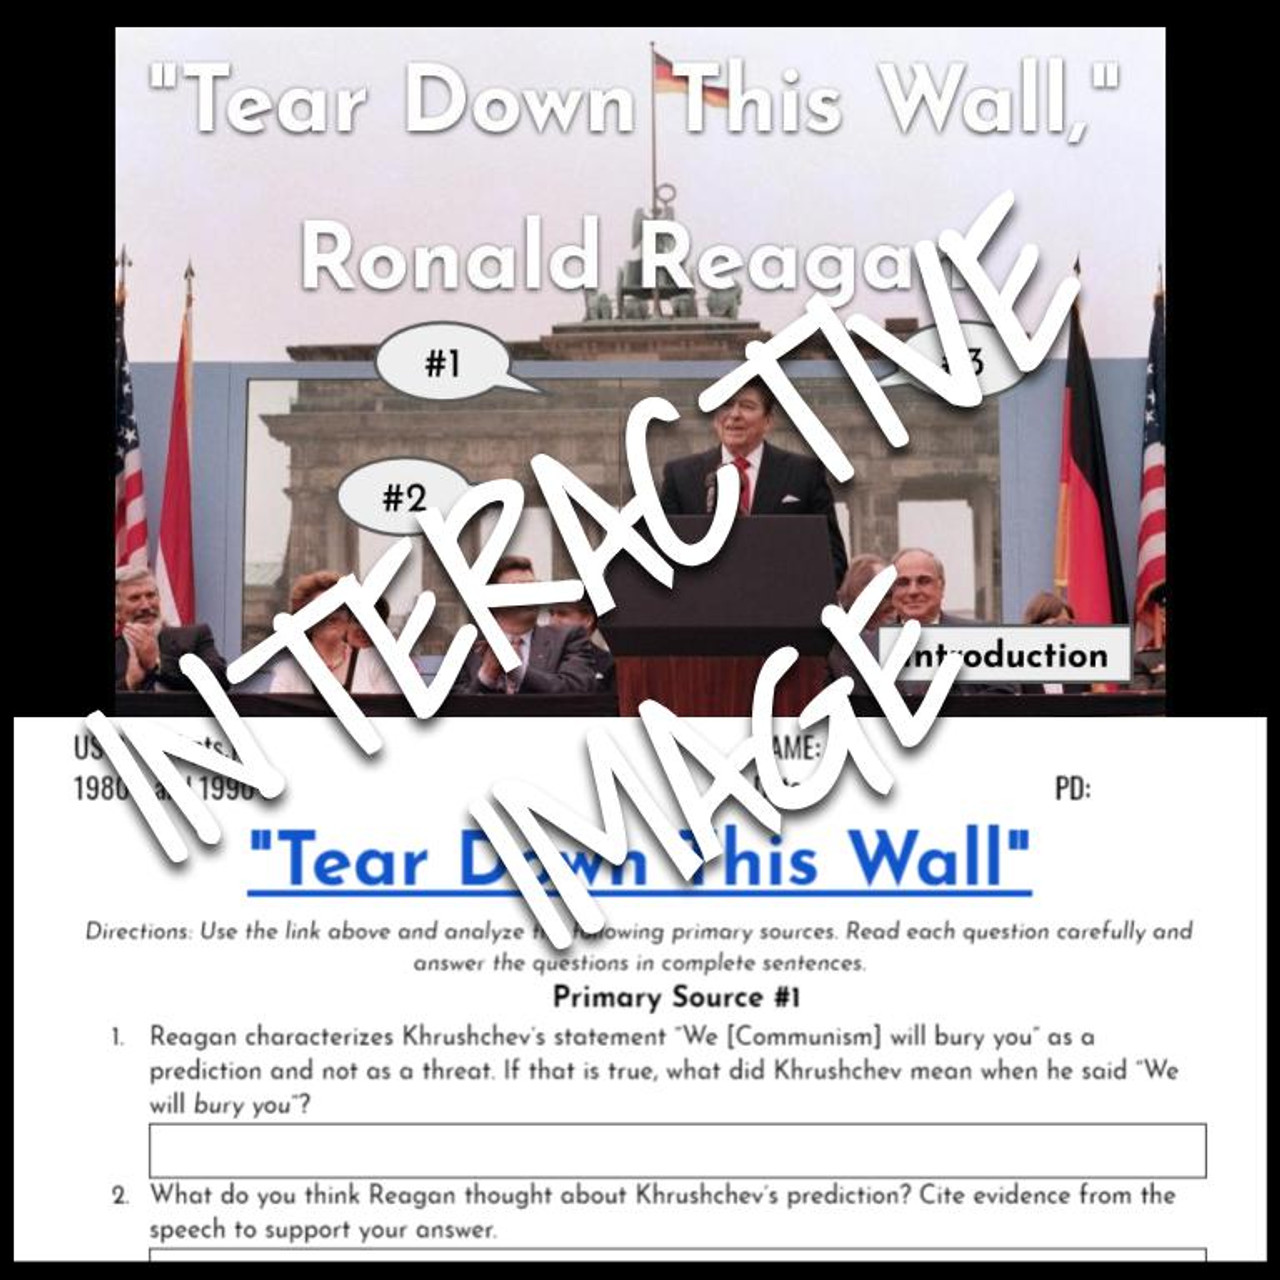 Interactive Image: "Tear Down this Wall" Speech, Ronald Reagan